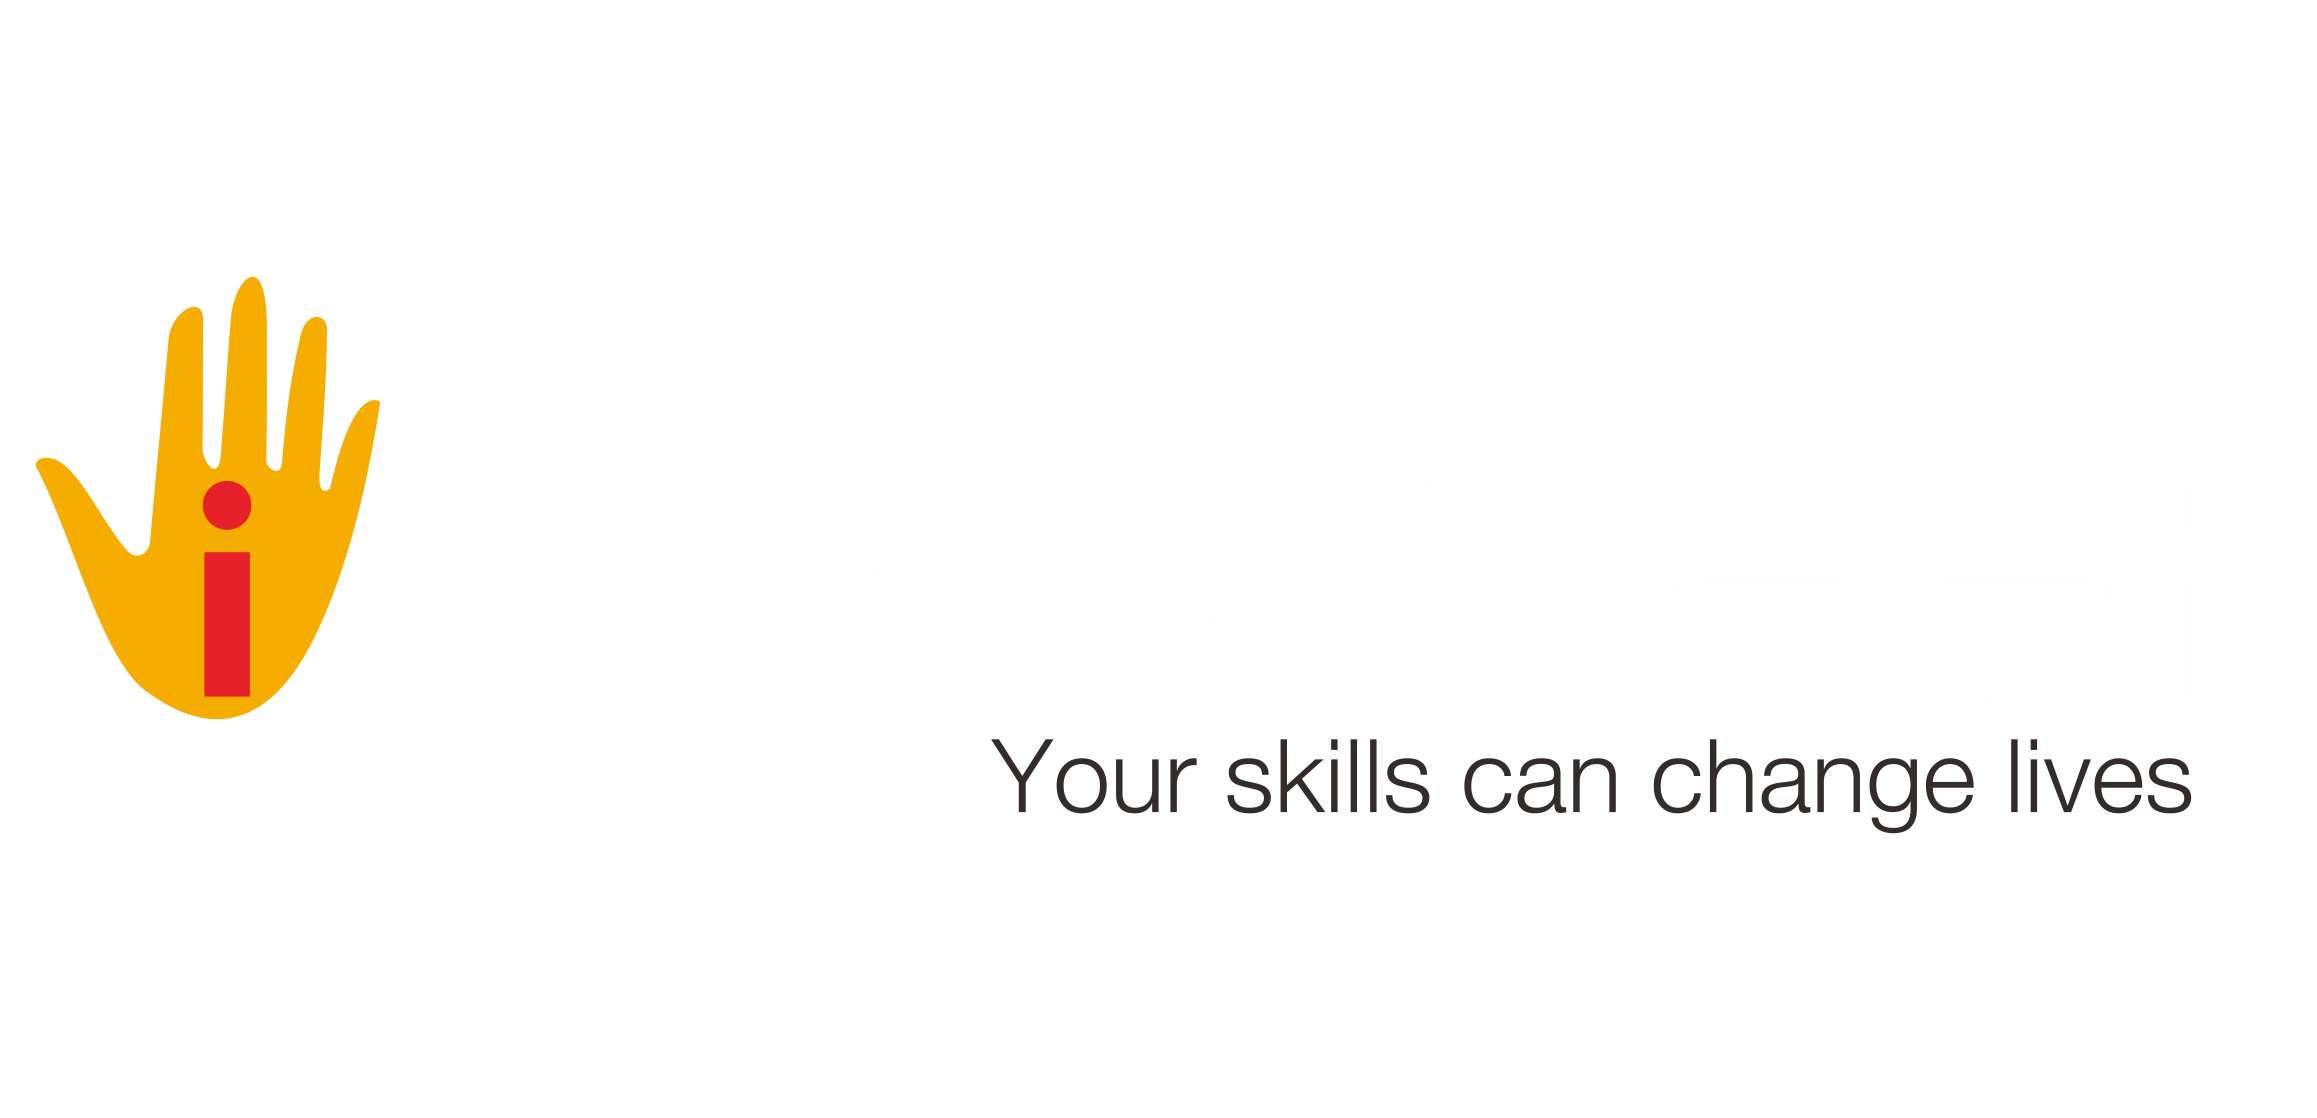 iVolunteer Blog – everything about volunteering